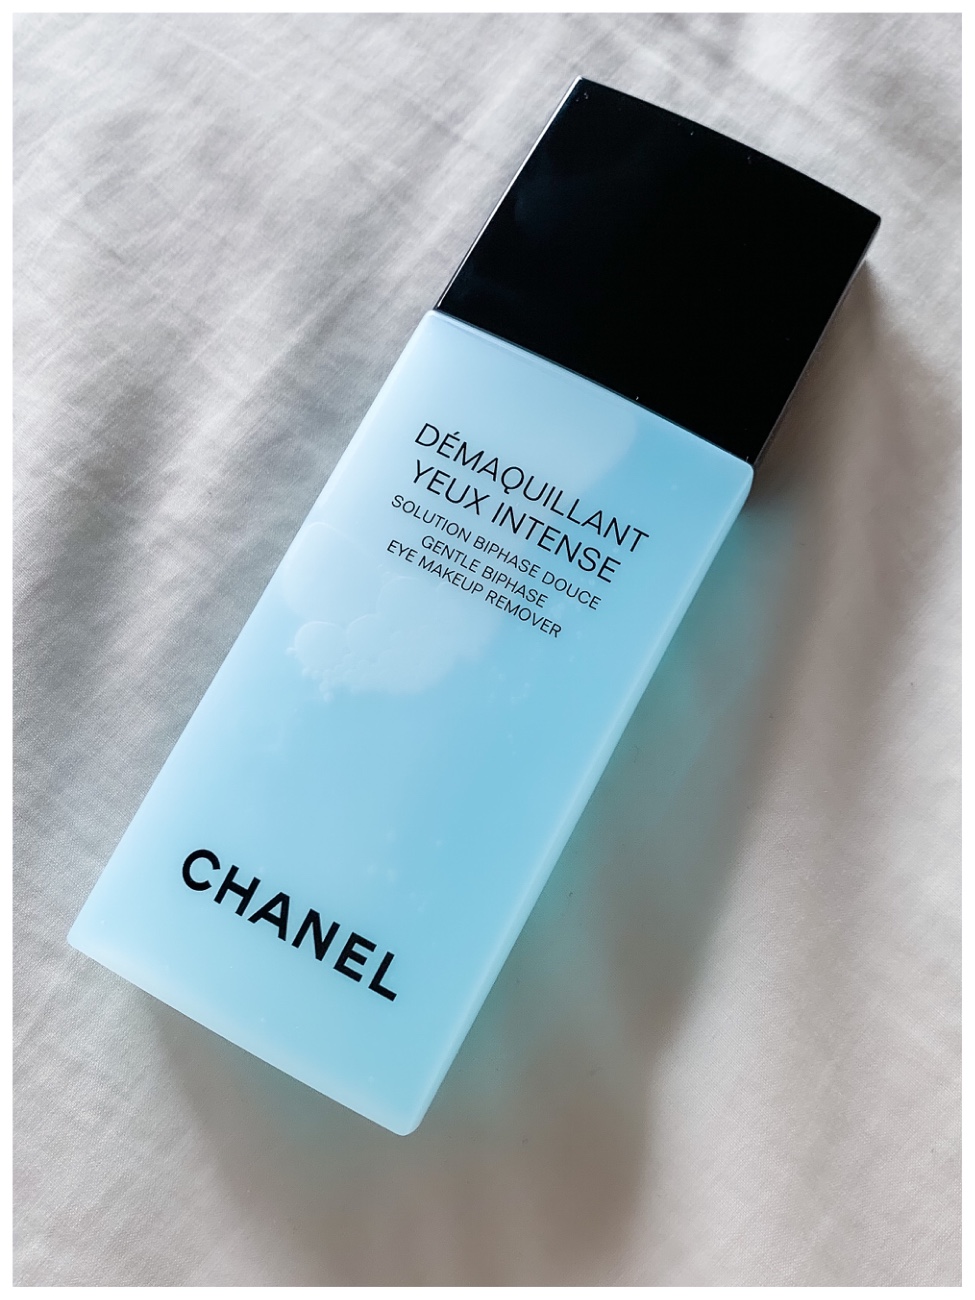 Chanel Demaquillant Yeux Intense Bi-phase Eye Remover Gentle Makeup